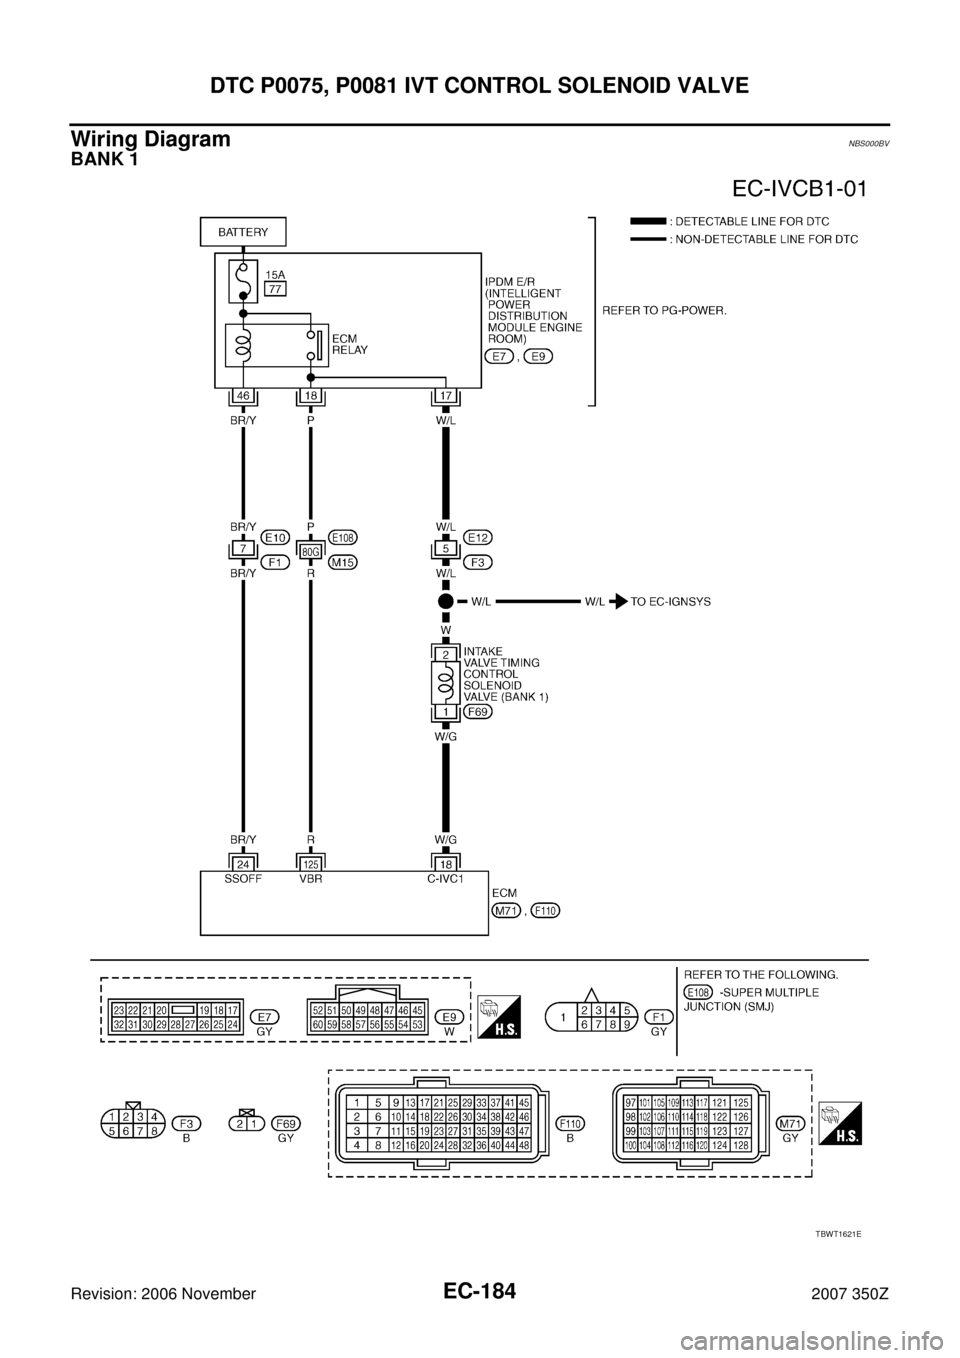 NISSAN 350Z 2007 Z33 Engine Control Workshop Manual EC-184
DTC P0075, P0081 IVT CONTROL SOLENOID VALVE
Revision: 2006 November2007 350Z
Wiring DiagramNBS000BV
BANK 1
TBWT1621E 